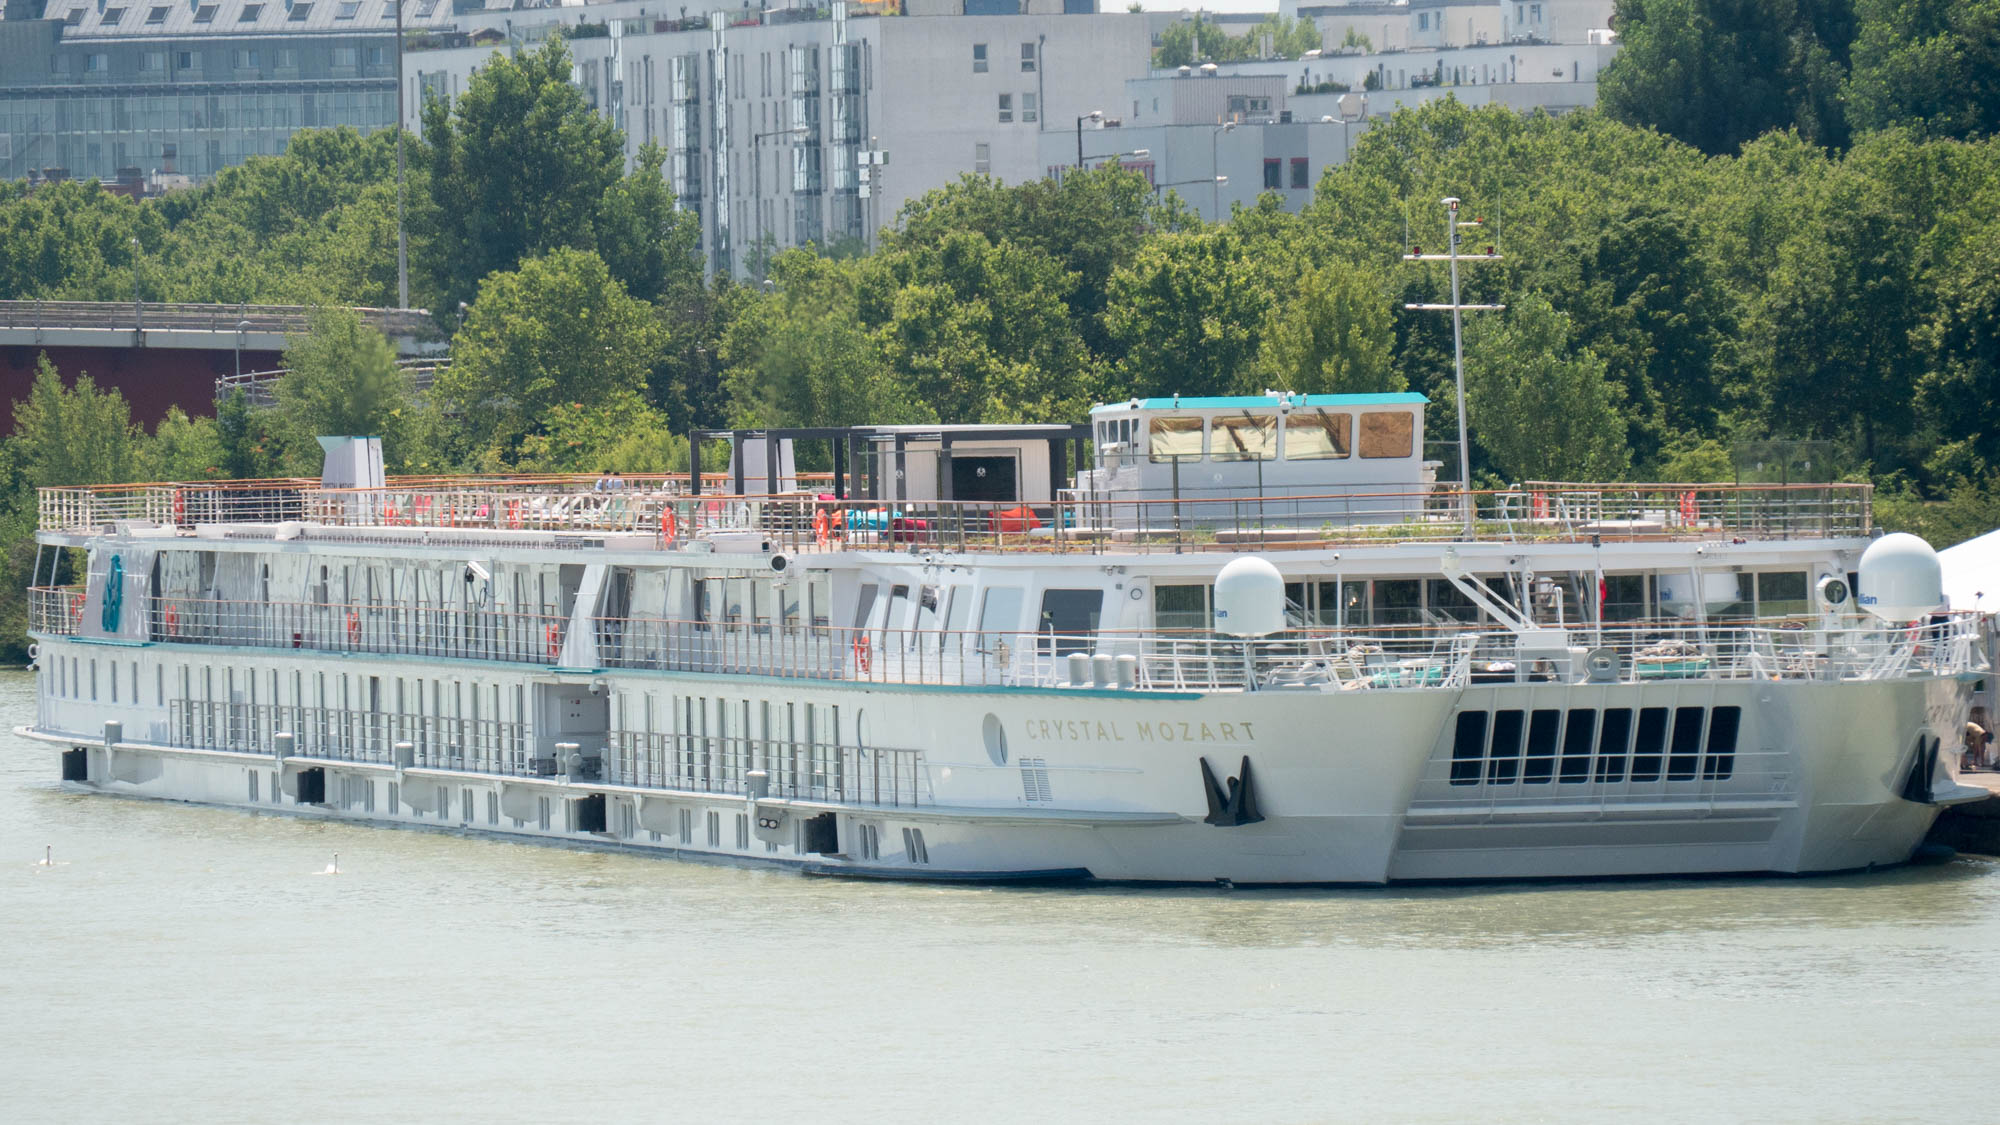 mozart luxury river cruise